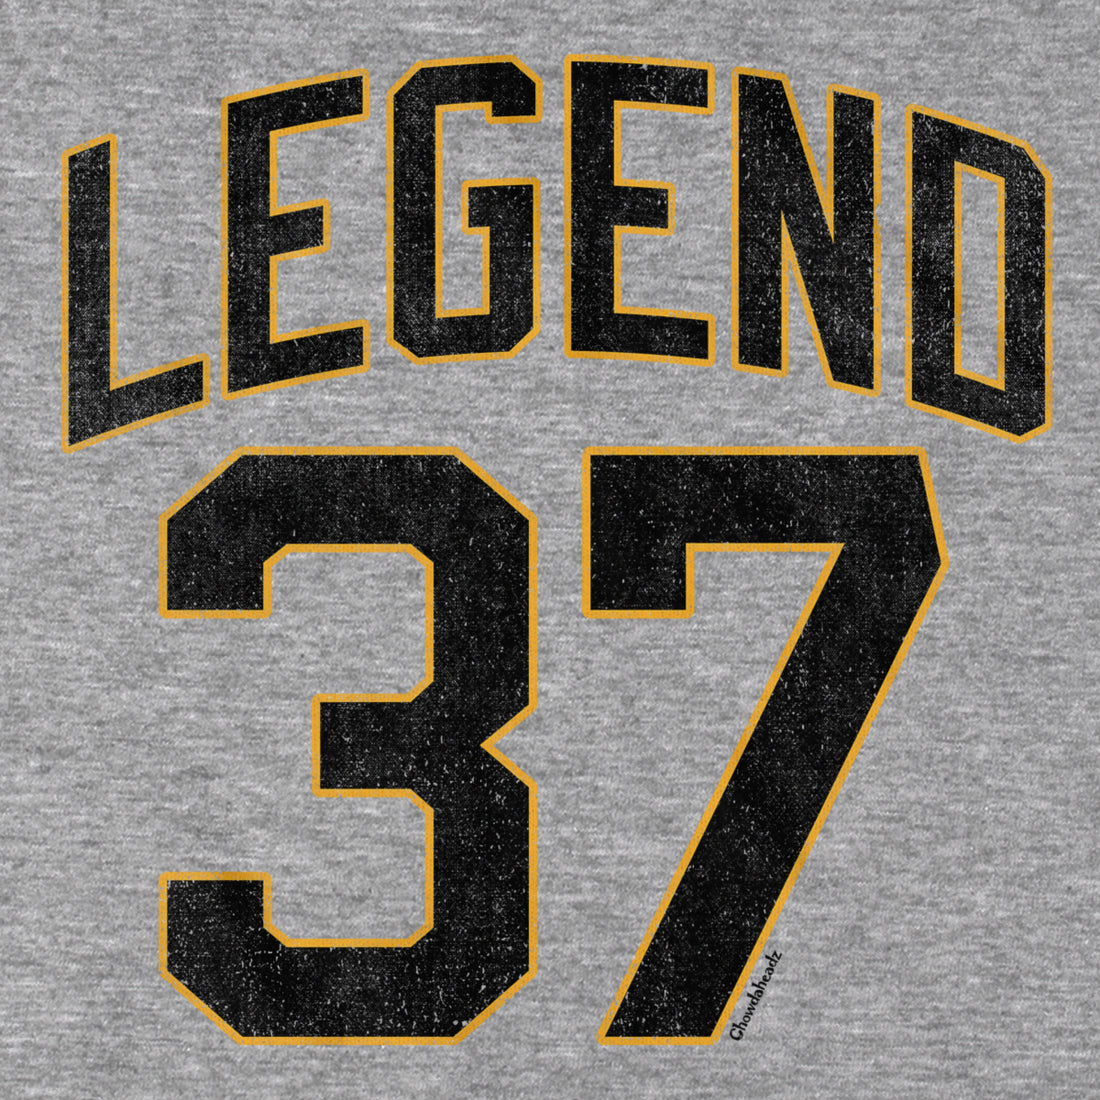 Legend 37 Alter Ego T-Shirt - Chowdaheadz